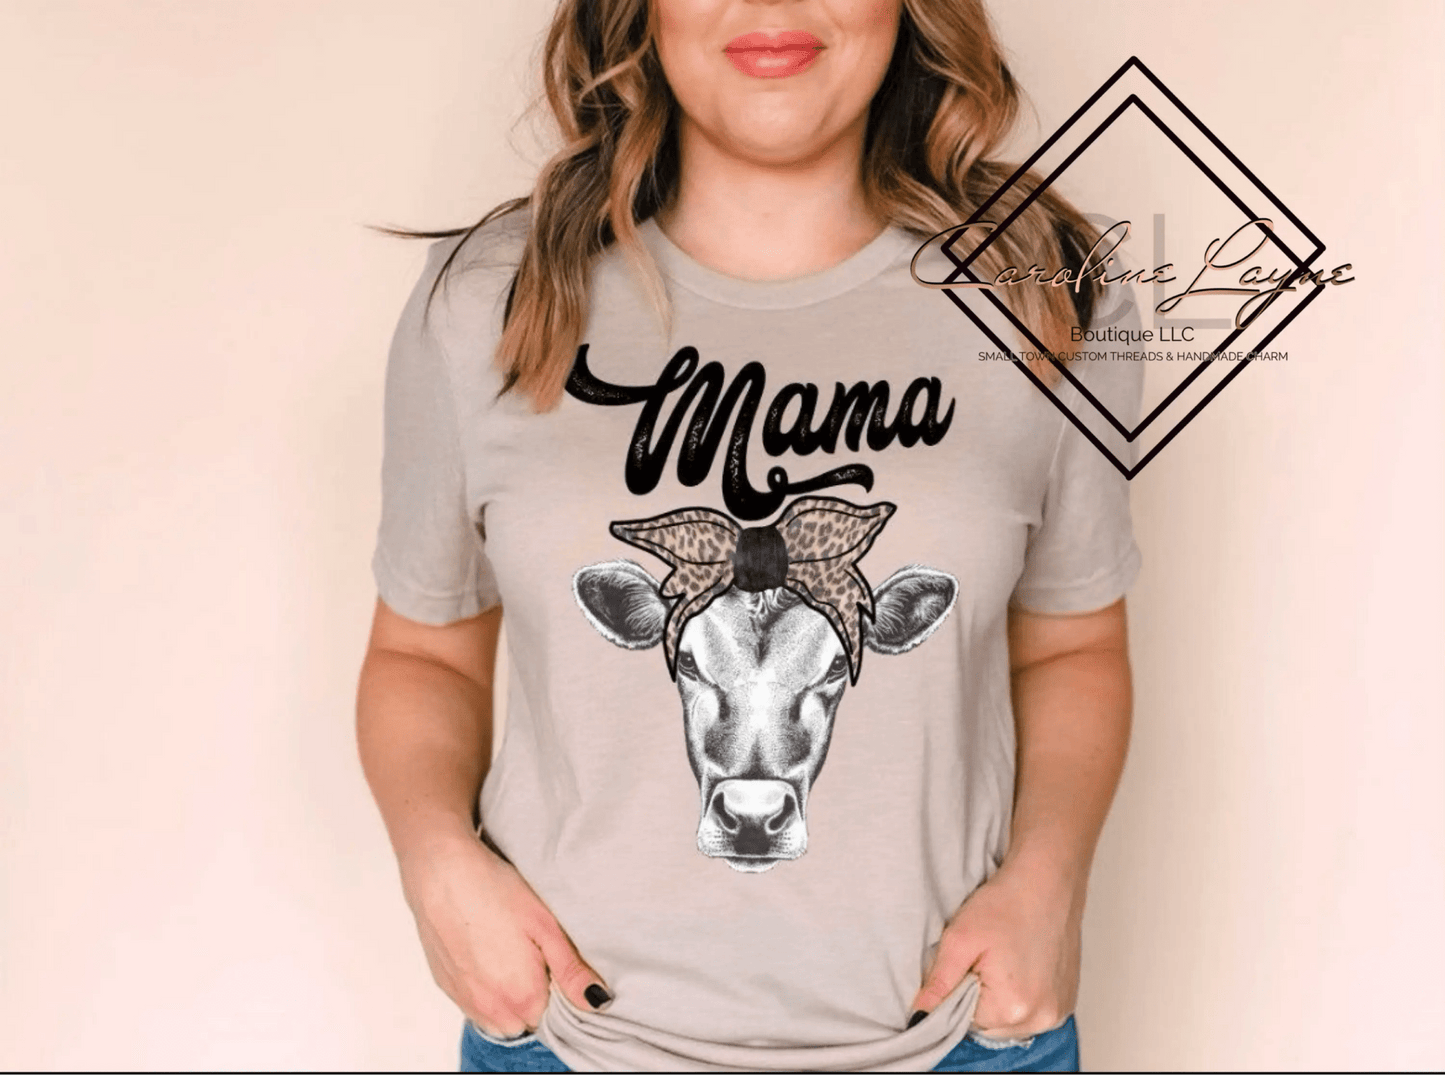 Retro Mama Cow Leopard Tee - Caroline Layne Boutique LLC